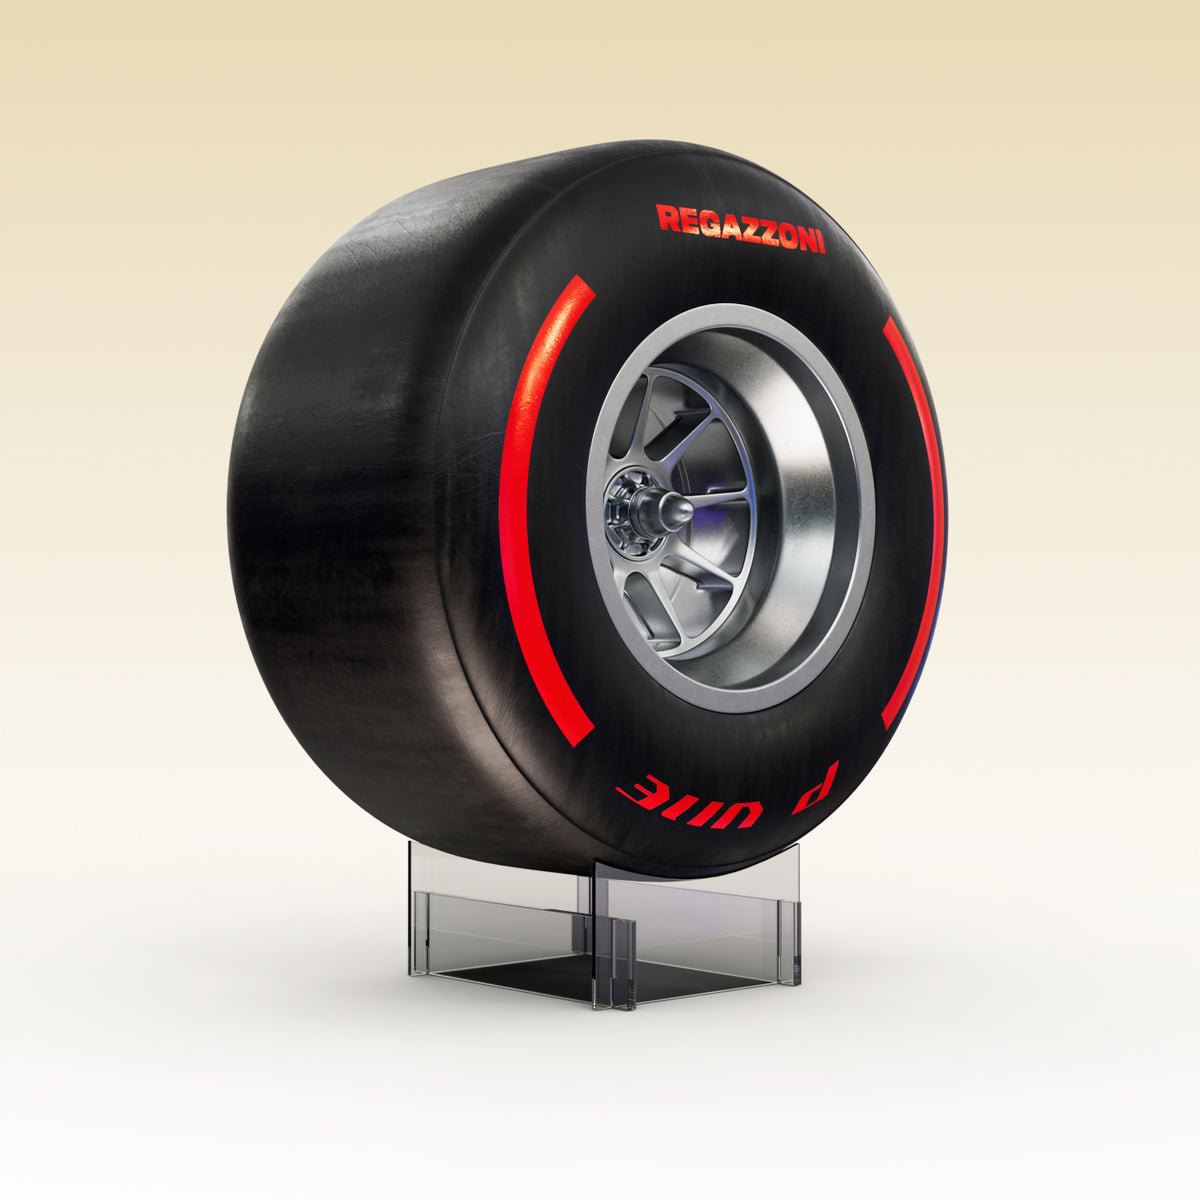 REGAZZONI Tyre - Pneu décoratif inspiré de la F1